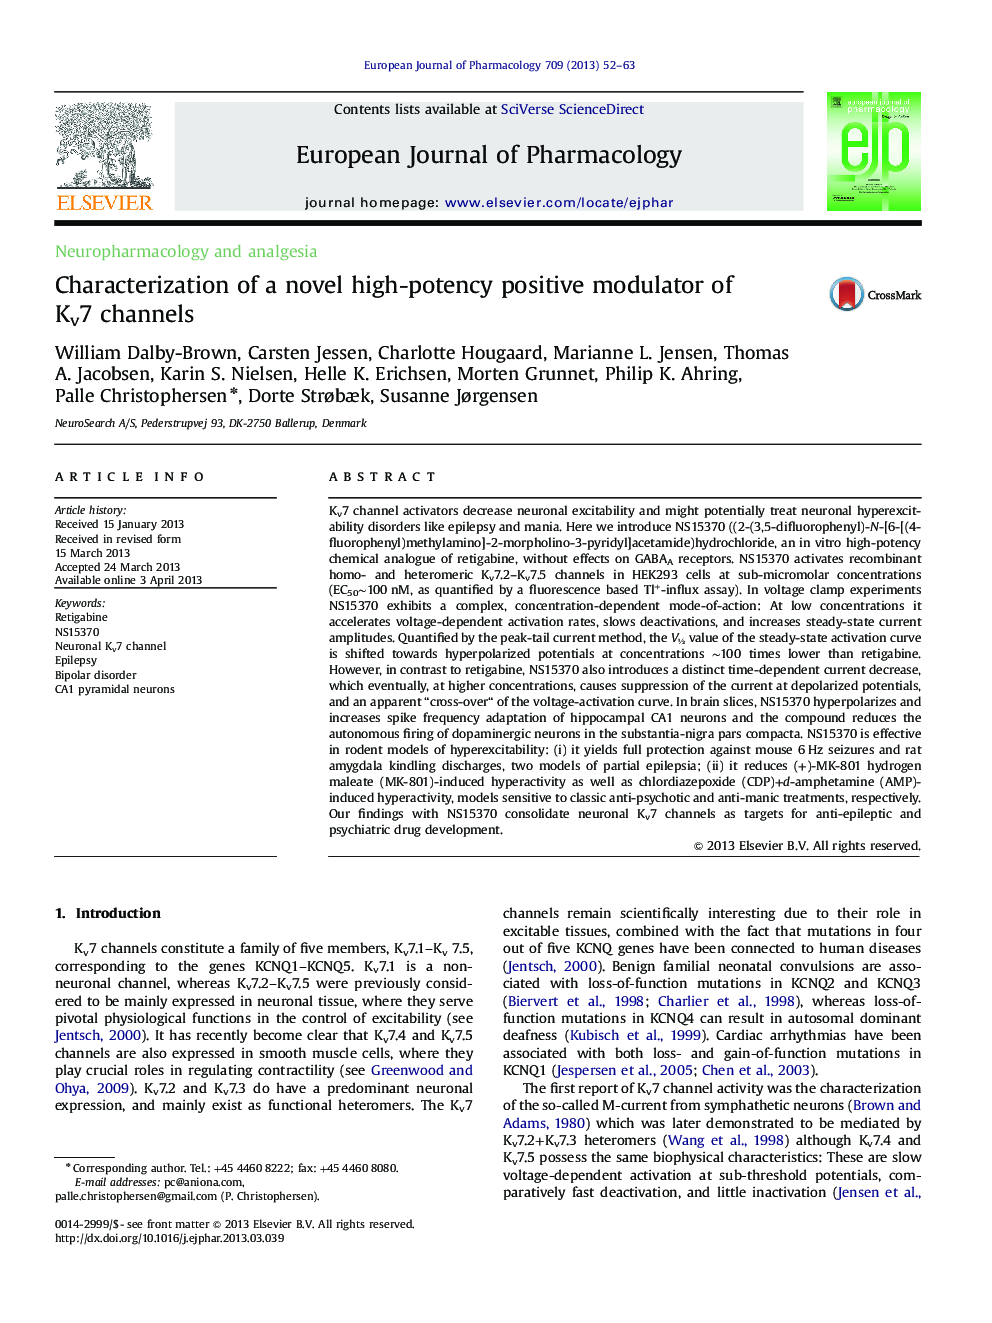 Characterization of a novel high-potency positive modulator of Kv7 channels